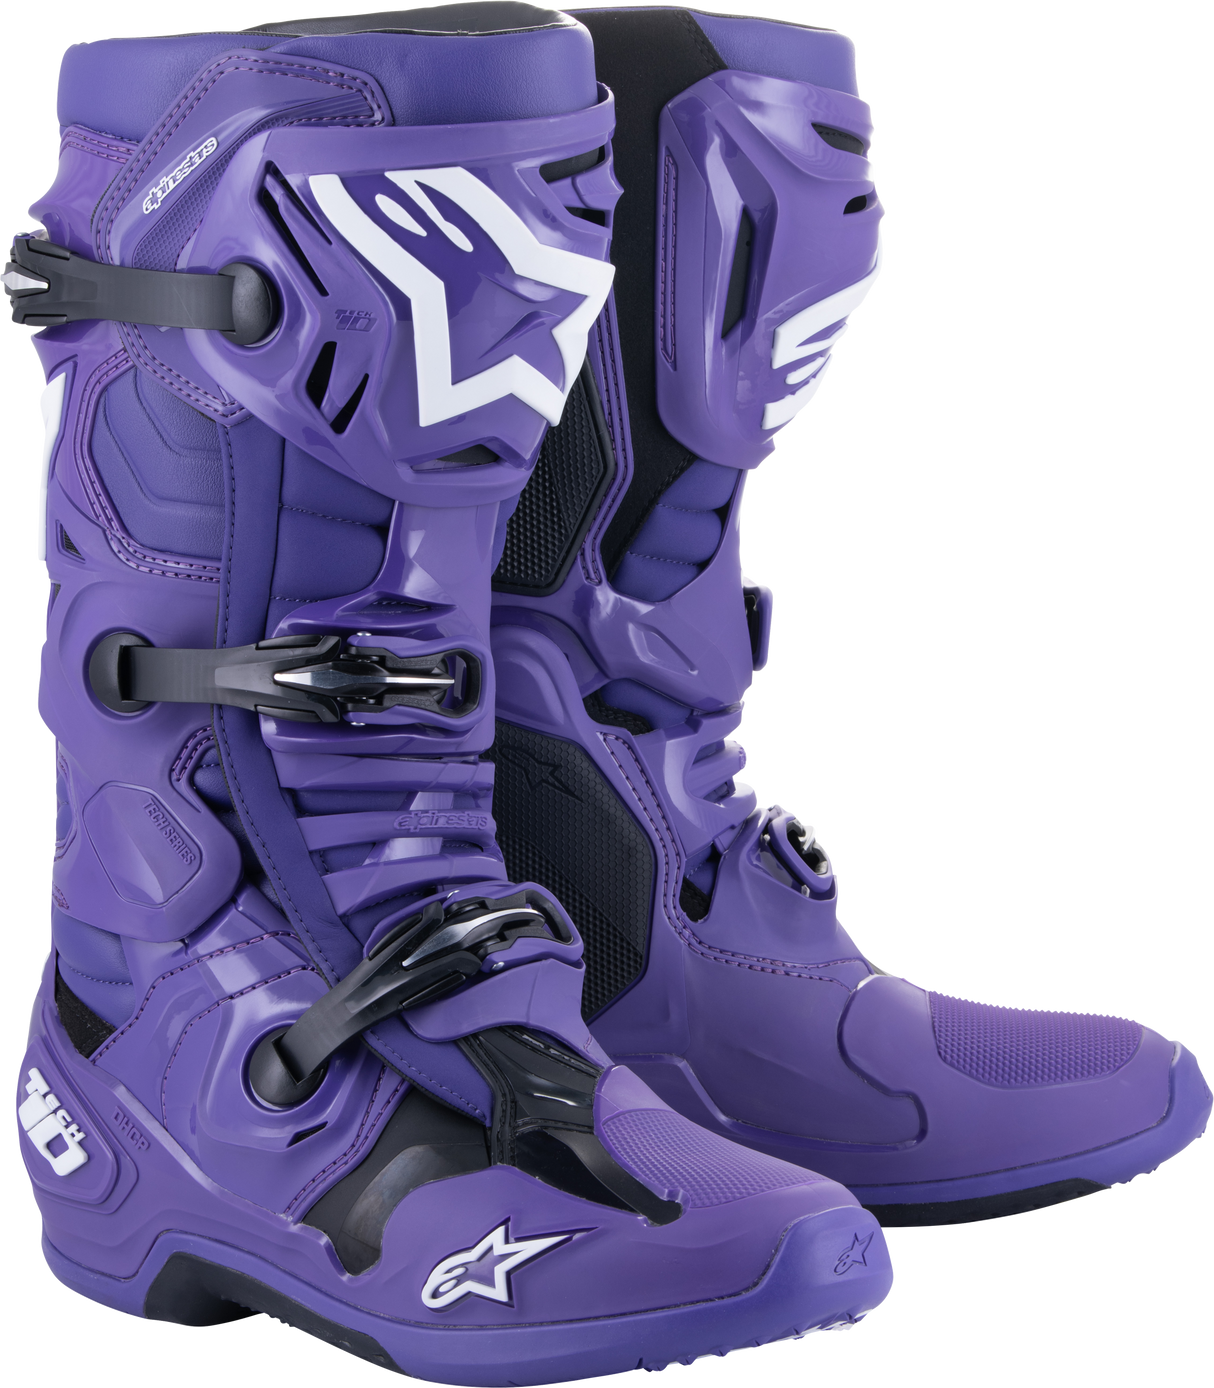 Tech 10 Boots Ultraviolet Black Sz 8